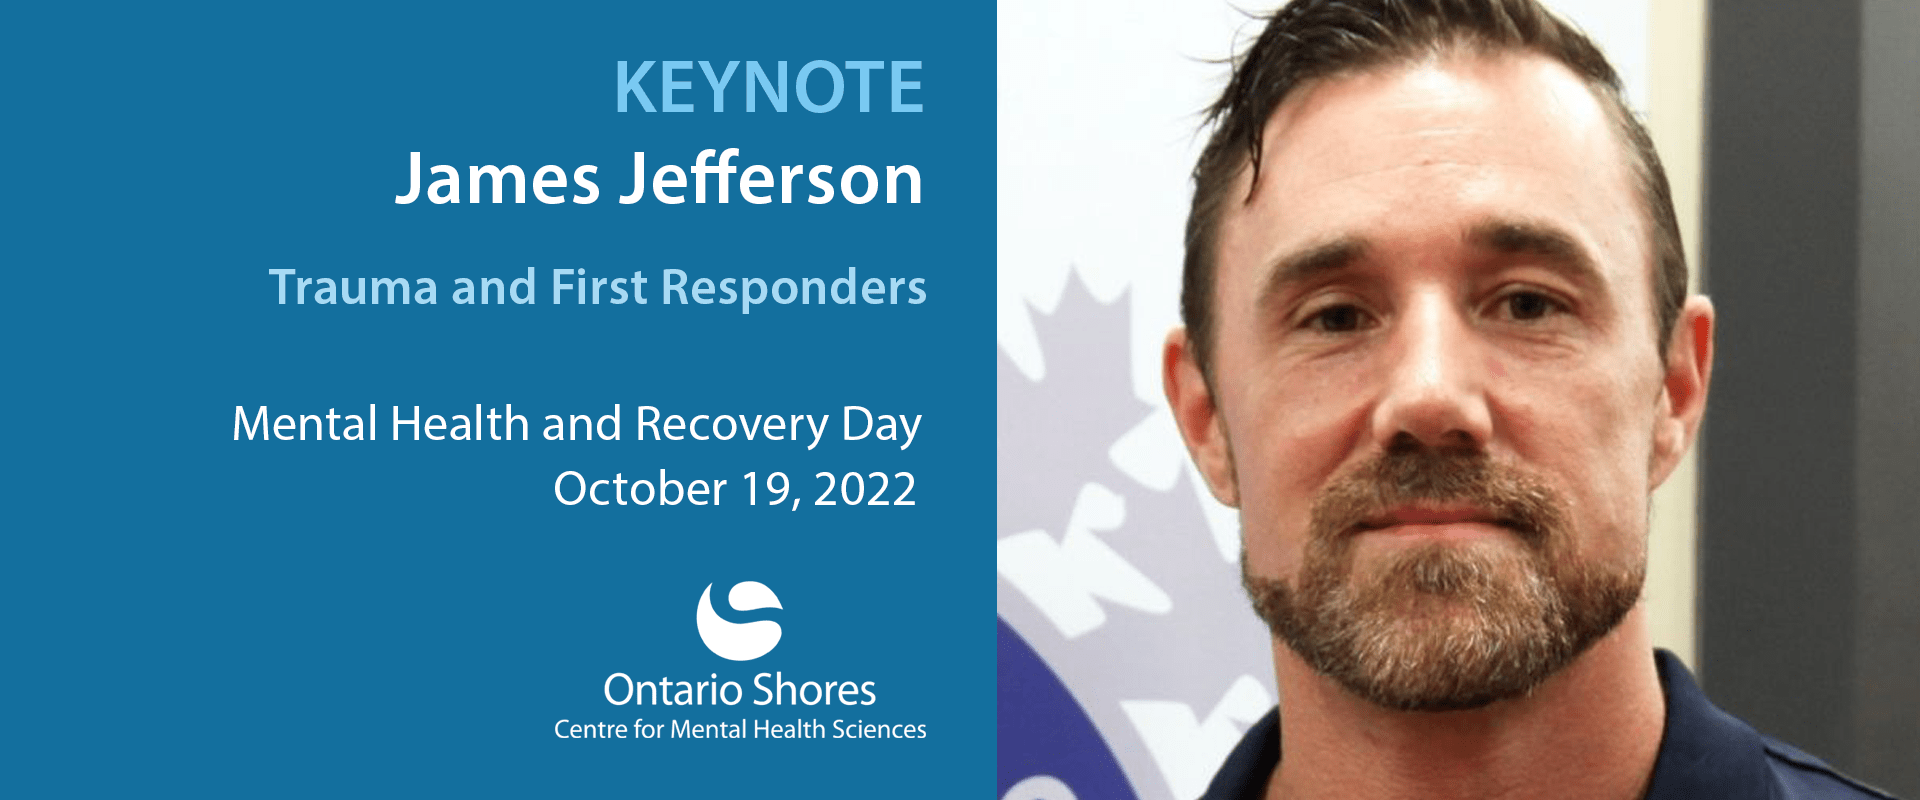 Keynote James Jefferson, Trauma and First Responders